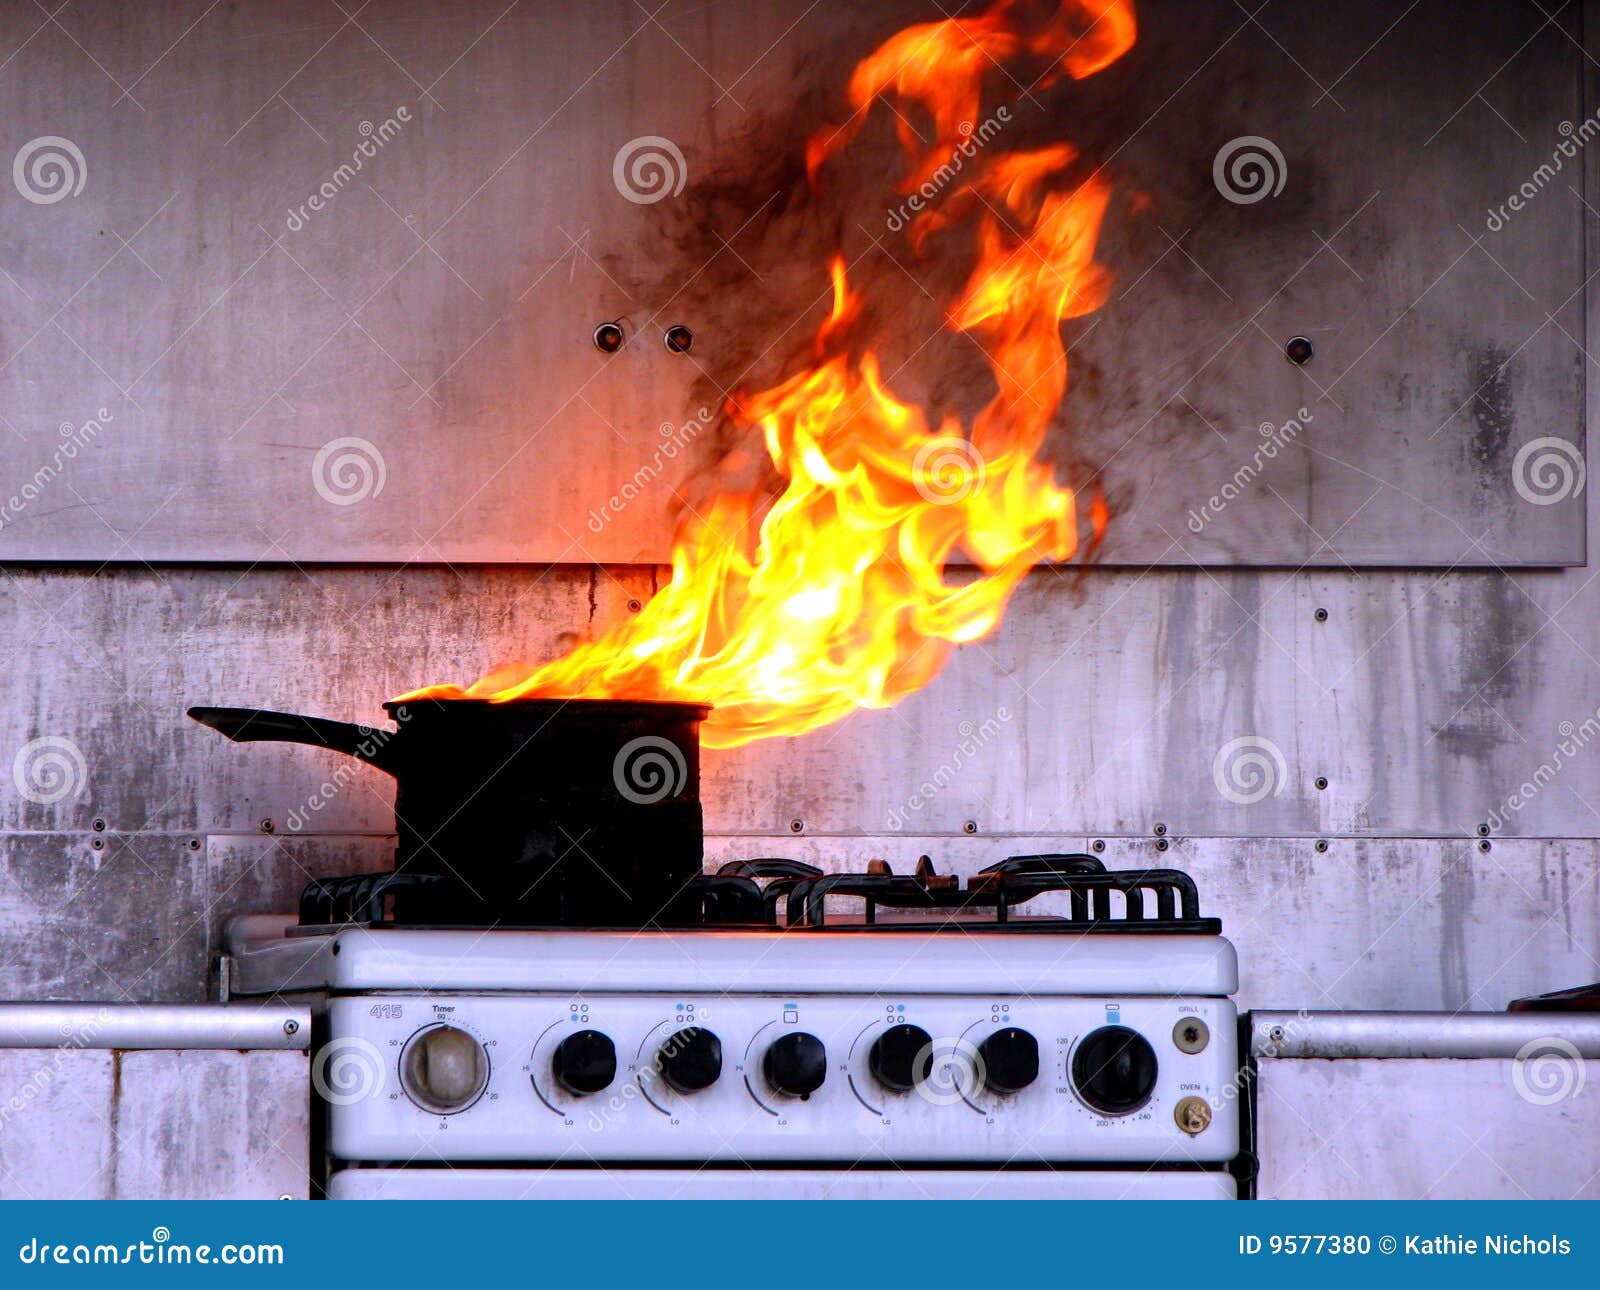 kitchen fire clipart - photo #33